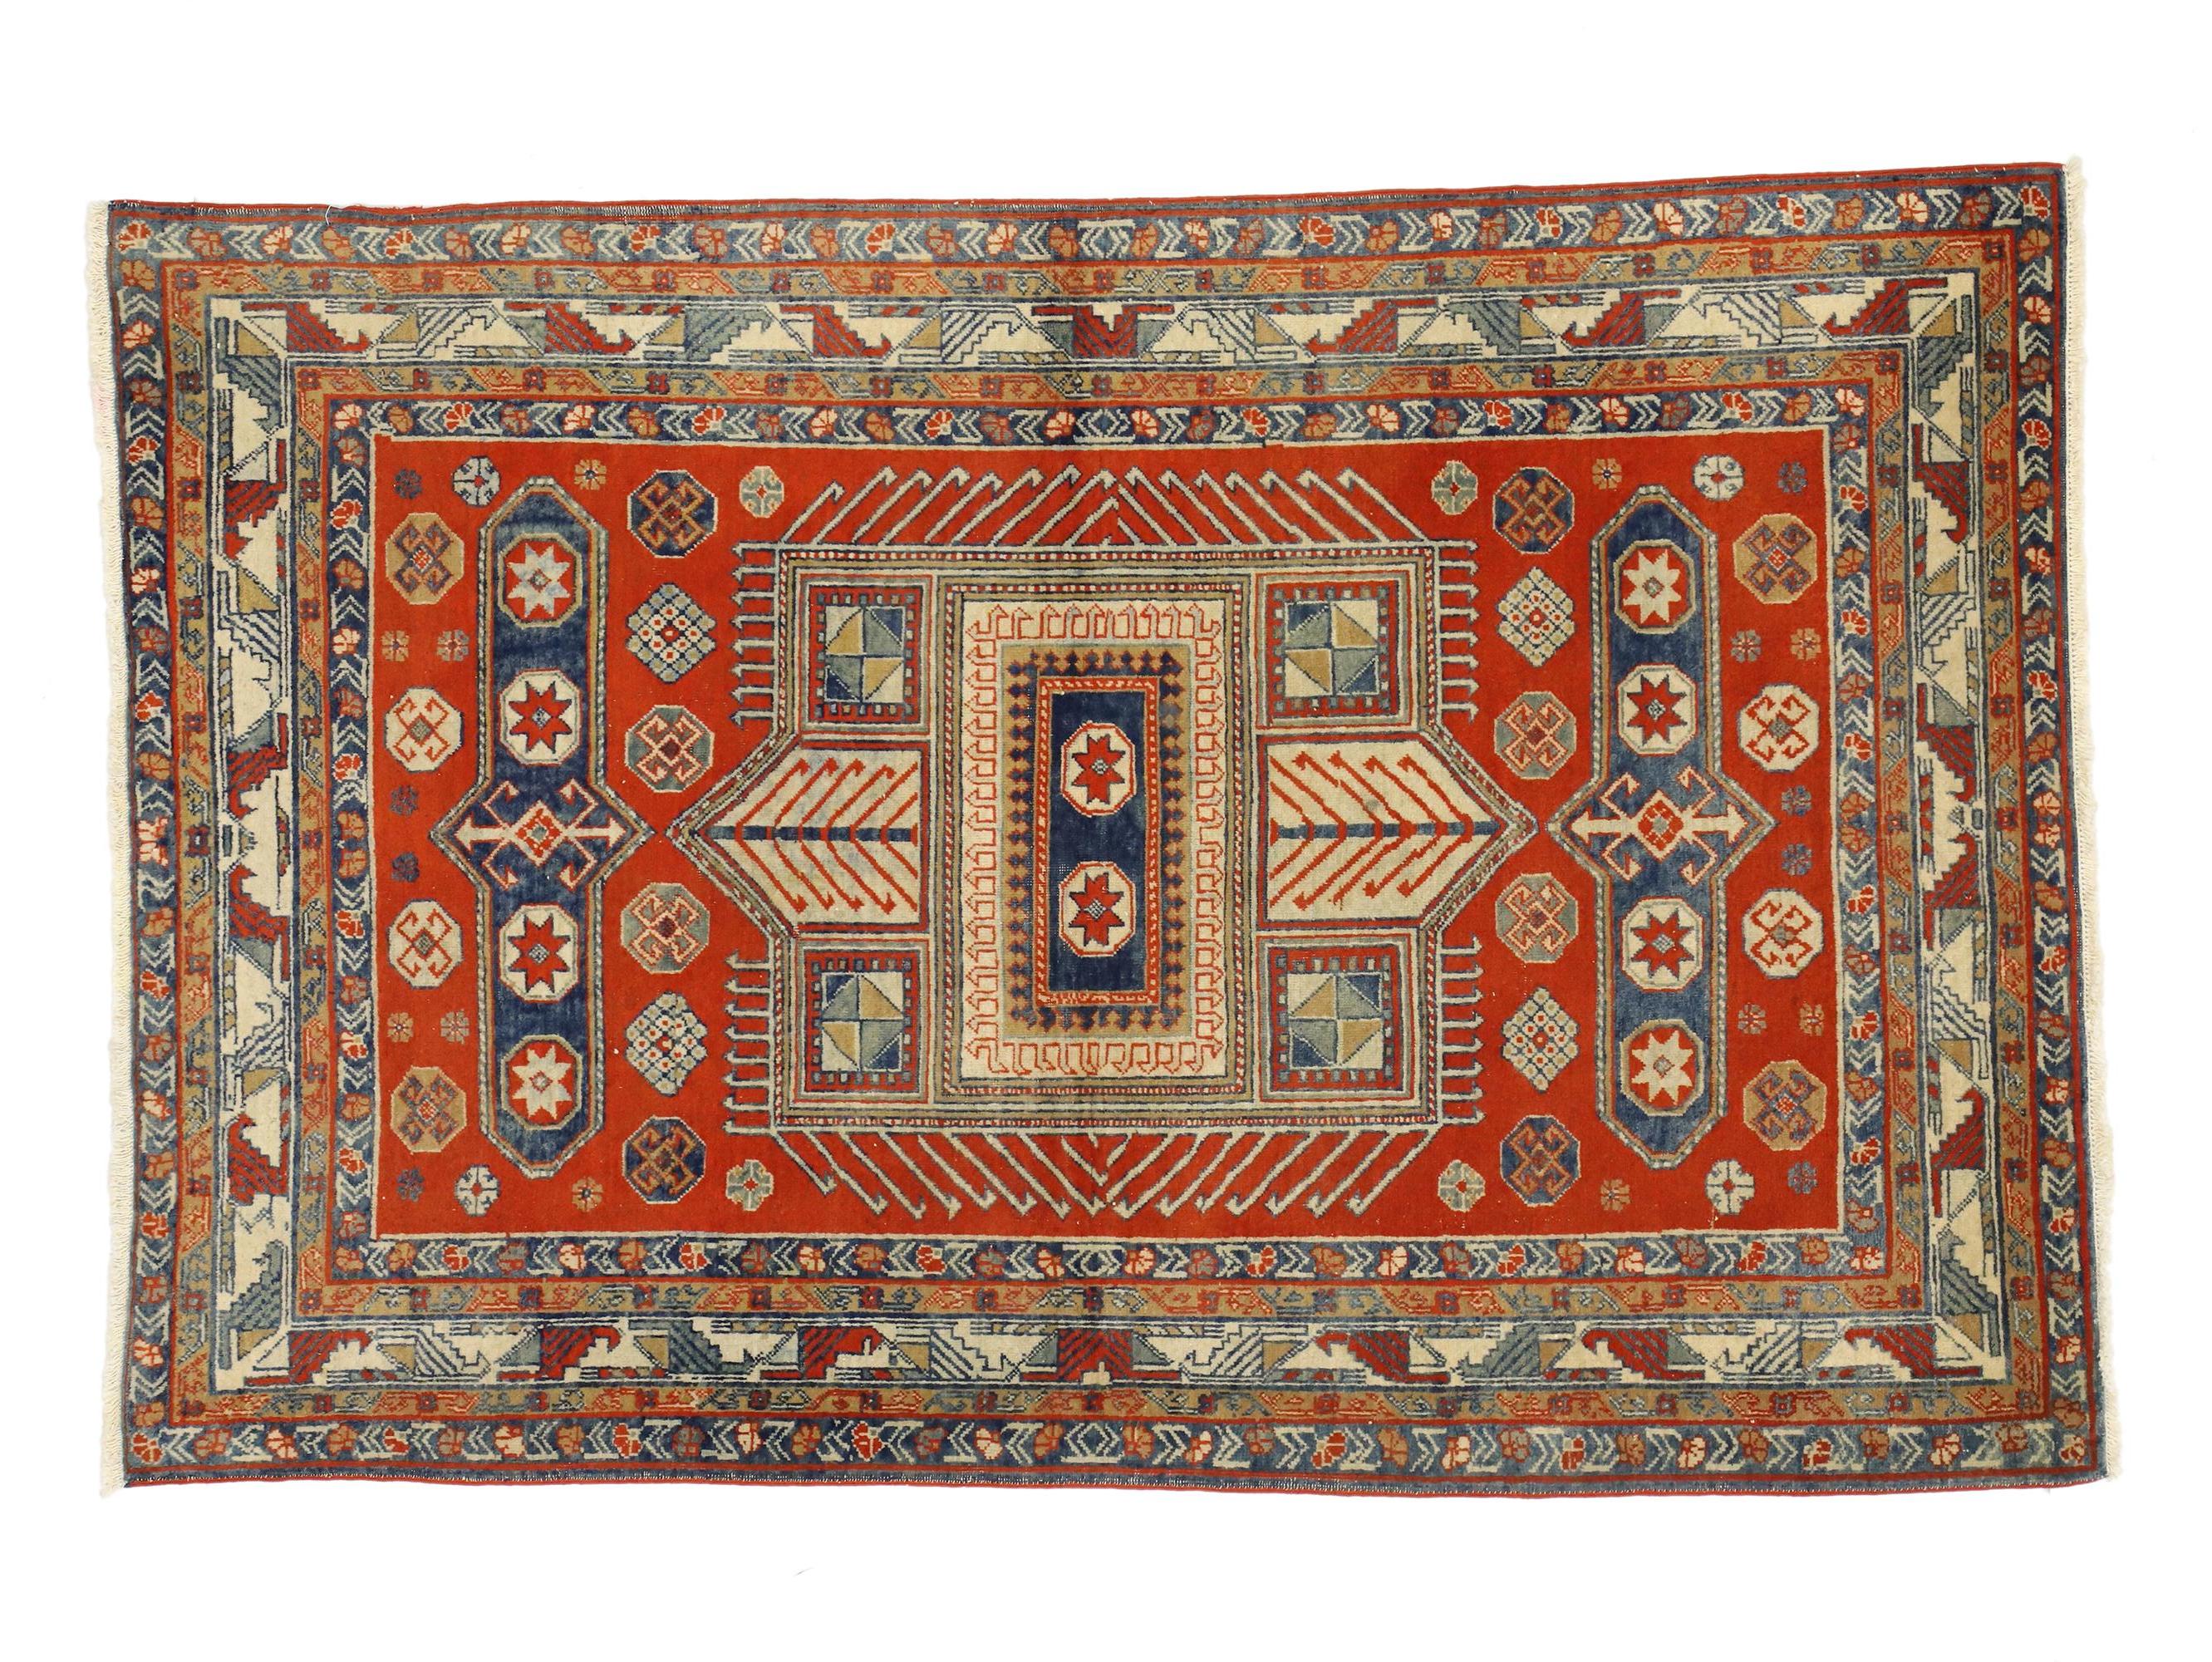 20th Century Antique Yerevan Rug with Modern Tribal Style, Russian Armenian Rug